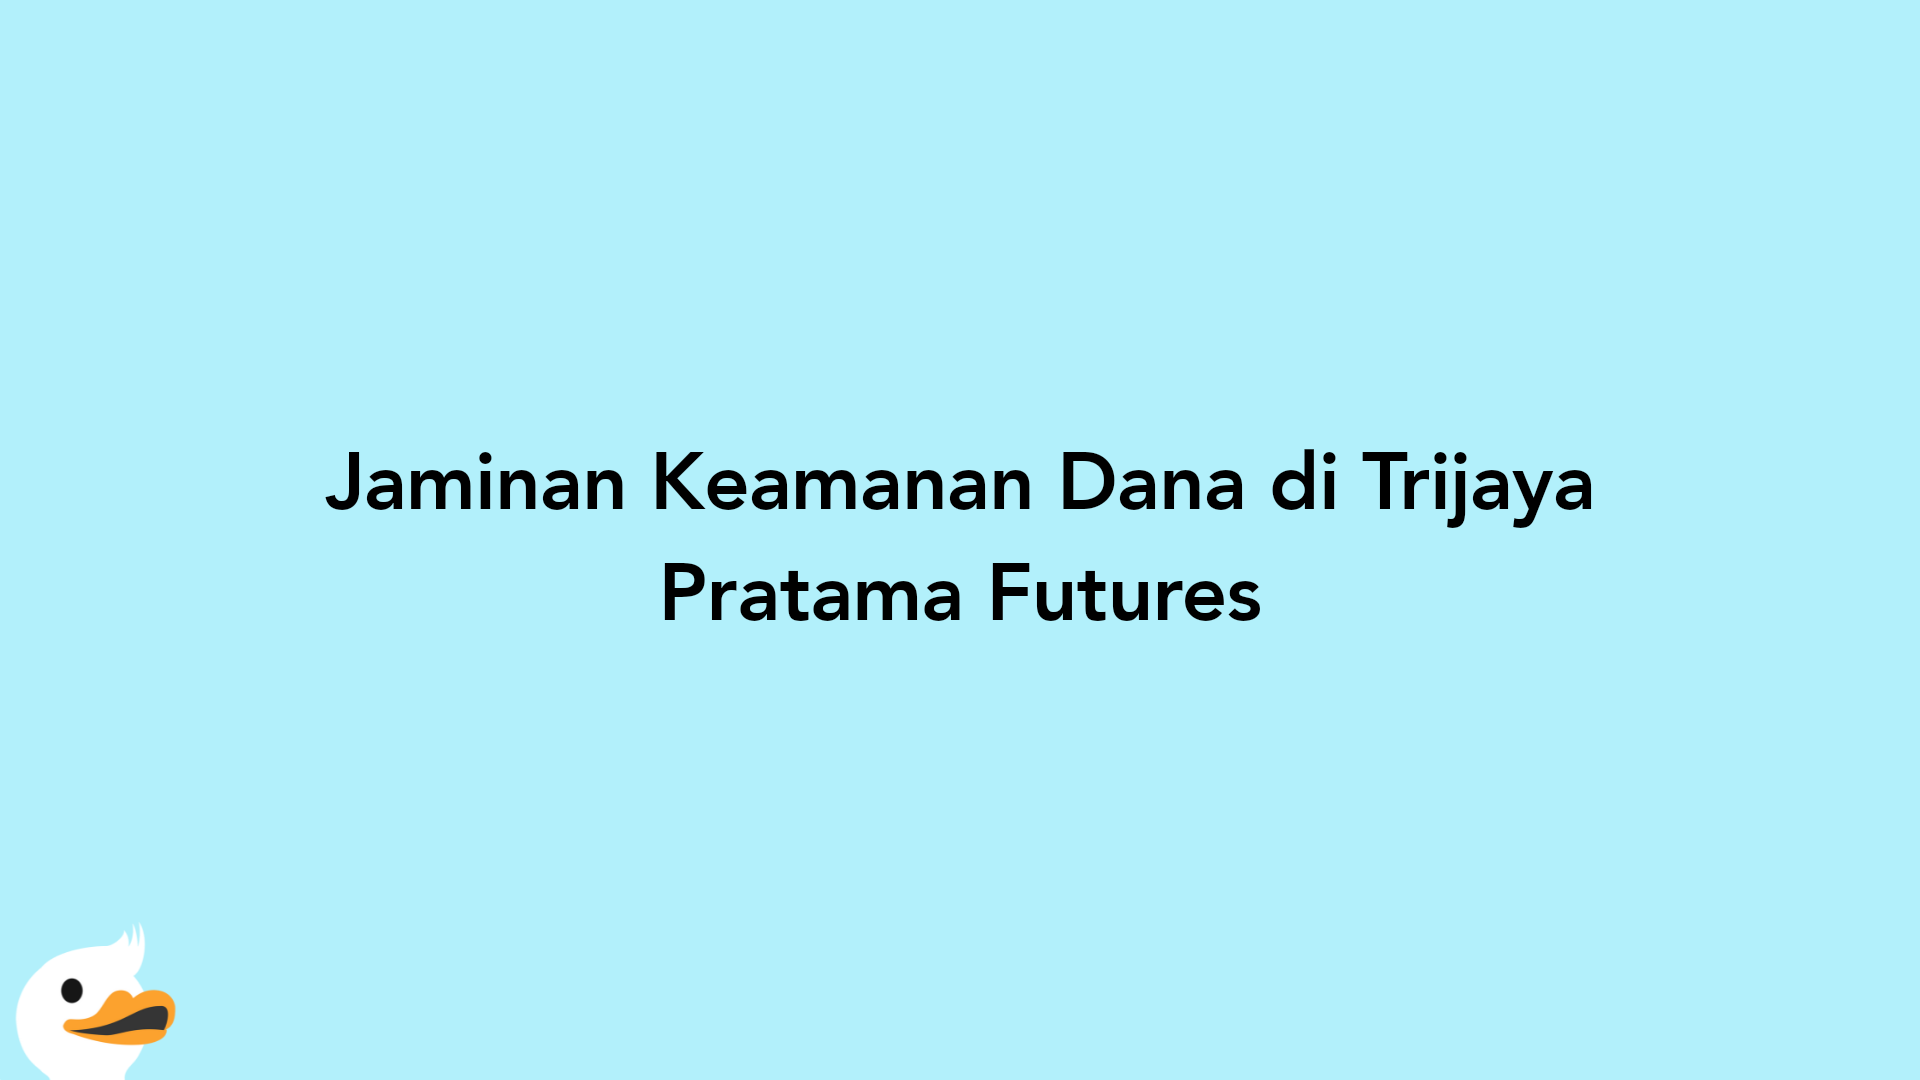 Jaminan Keamanan Dana di Trijaya Pratama Futures